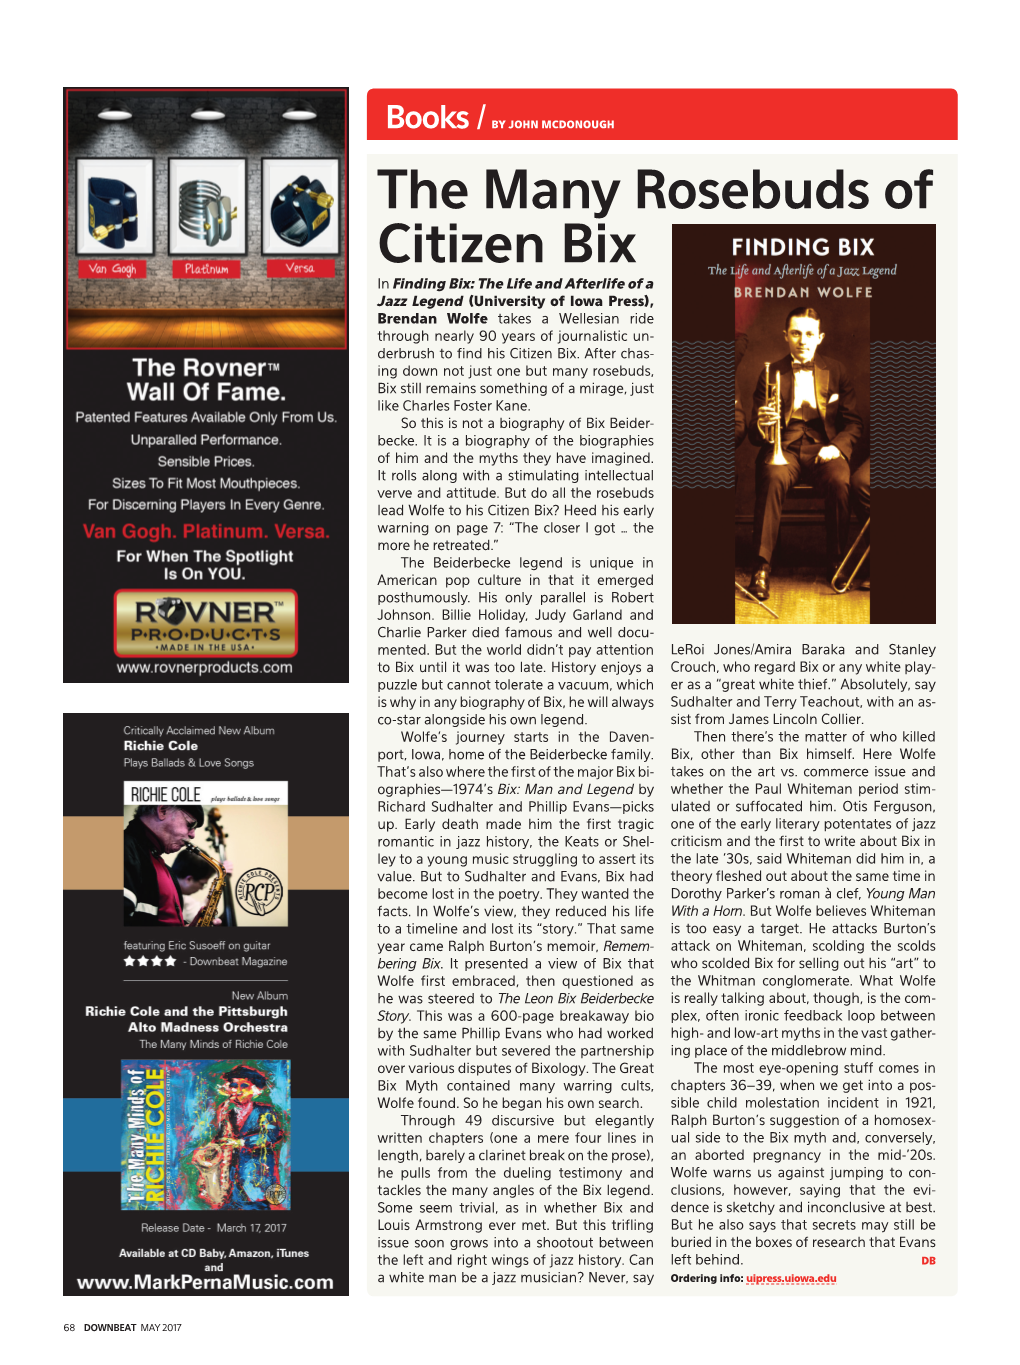 The Many Rosebuds of Citizen